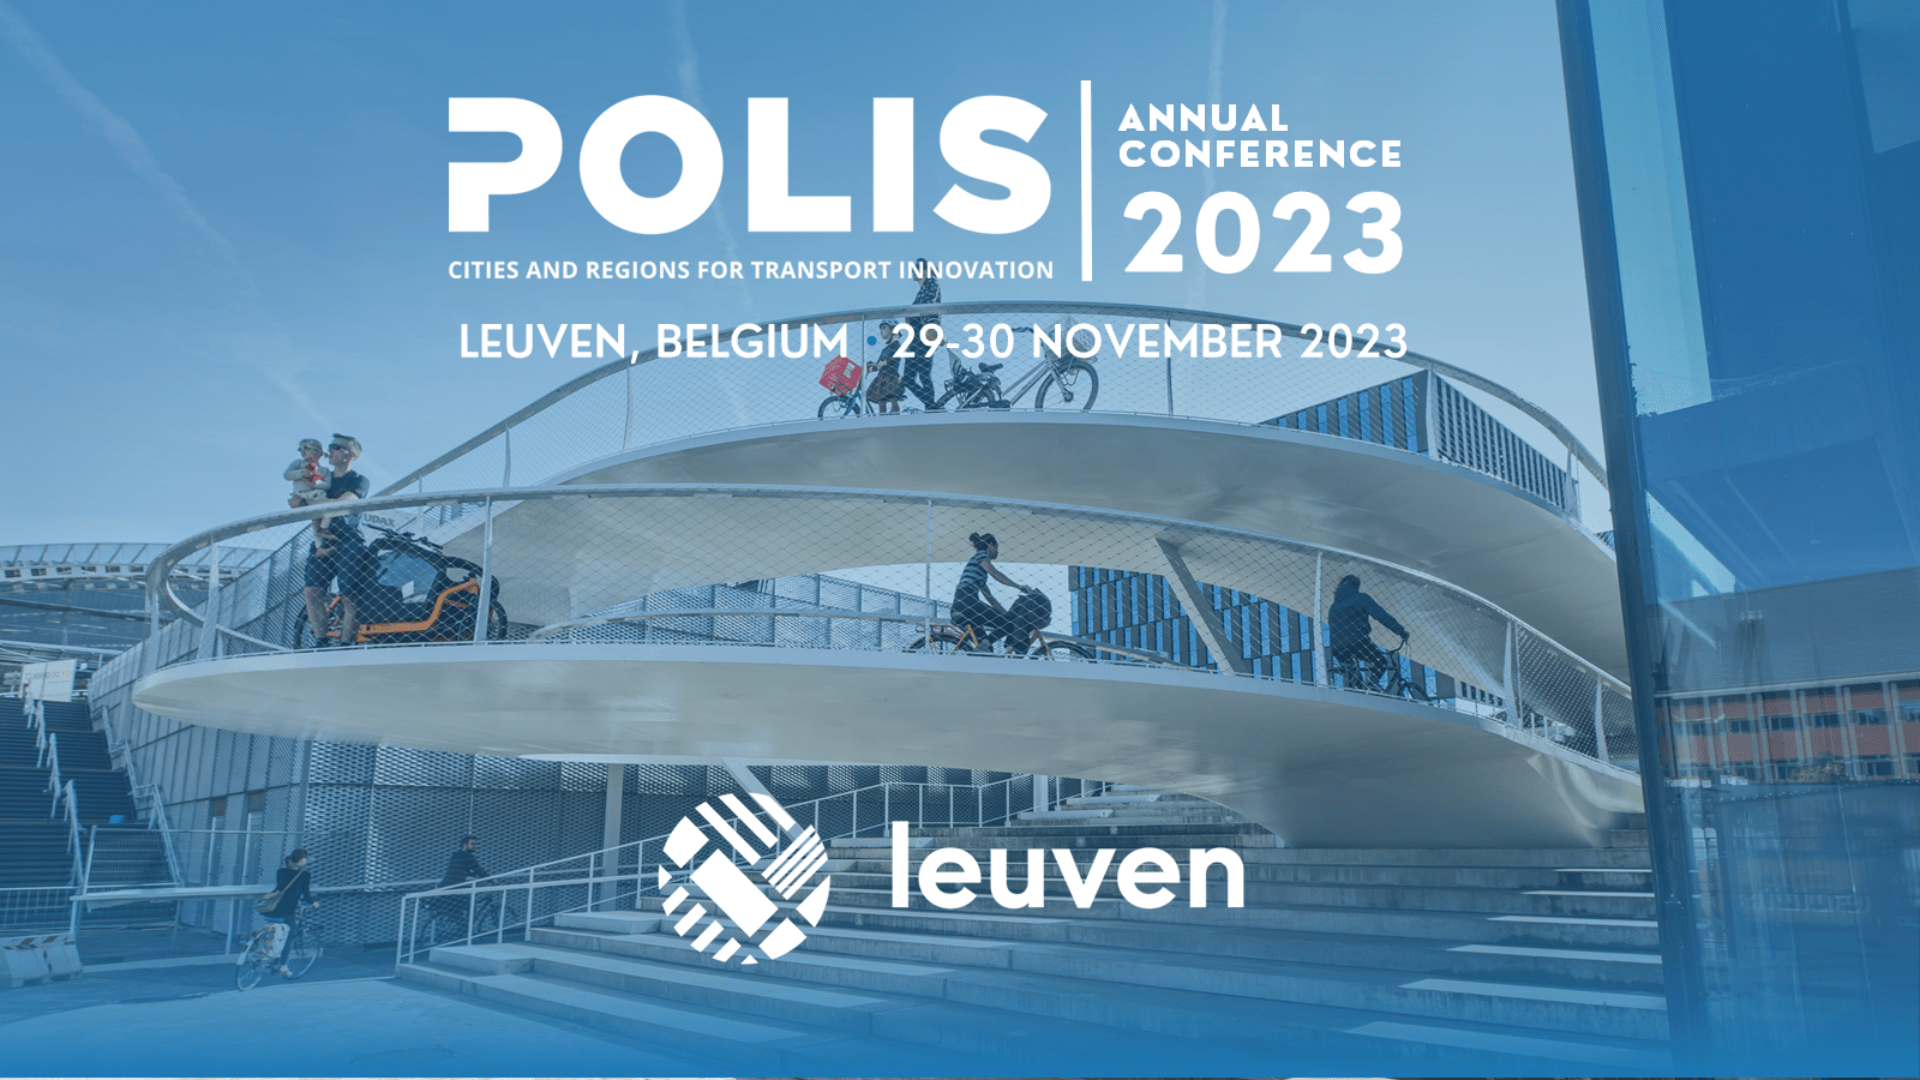 Conferenza annuale POLIS I 29-30 novembre: Paola Cossu, CEO FIT, modererà il panel “WHEN URBAN PLANNING MEETS LOGISTICS: PATHWAYS TO SULPS”